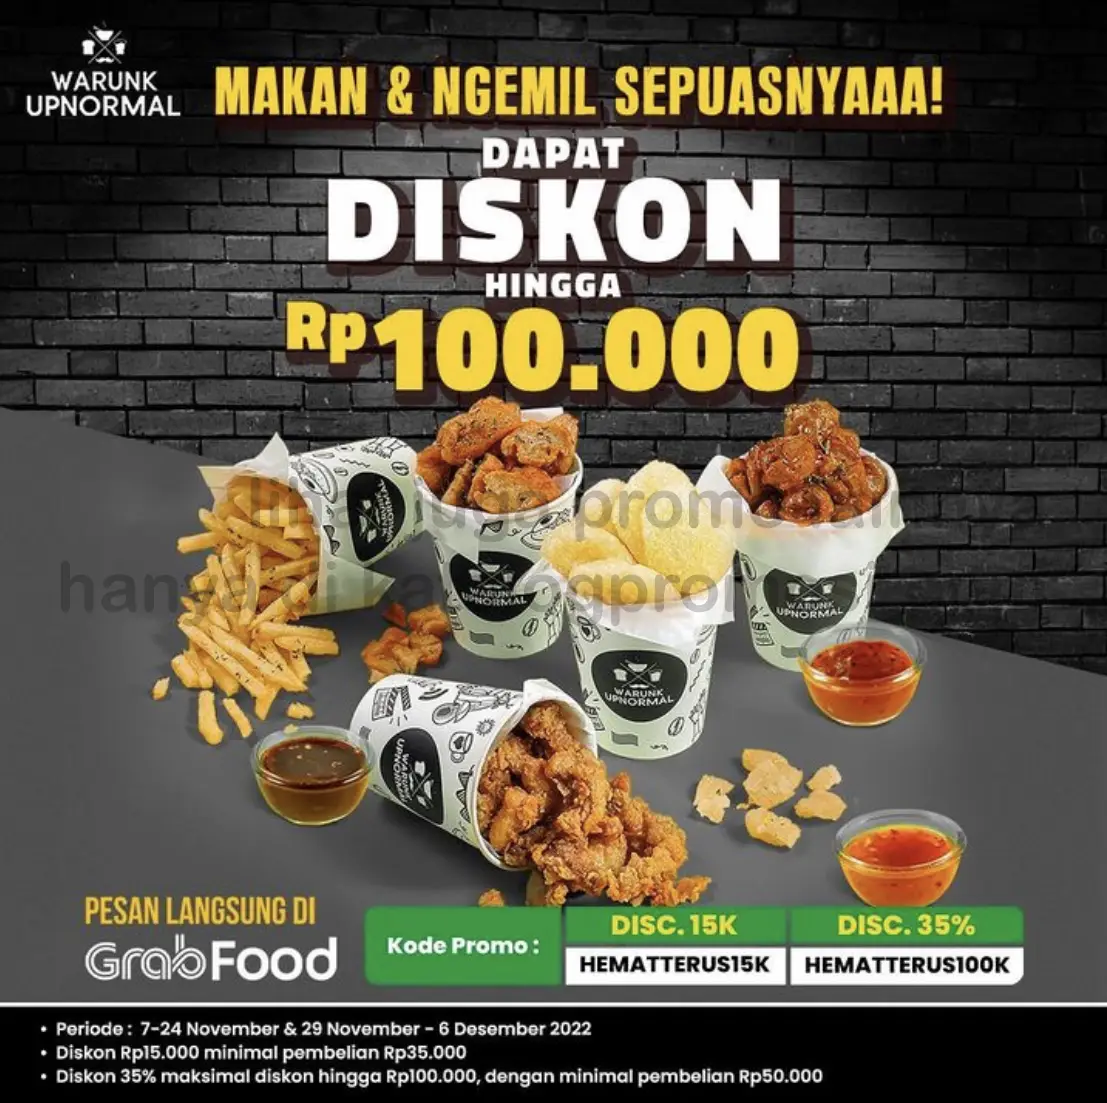 Promo WARUNK UPNORMAL GRABFOOD DISKON hingga Rp. 100.000 khusus pemesanan via GRABFOOD